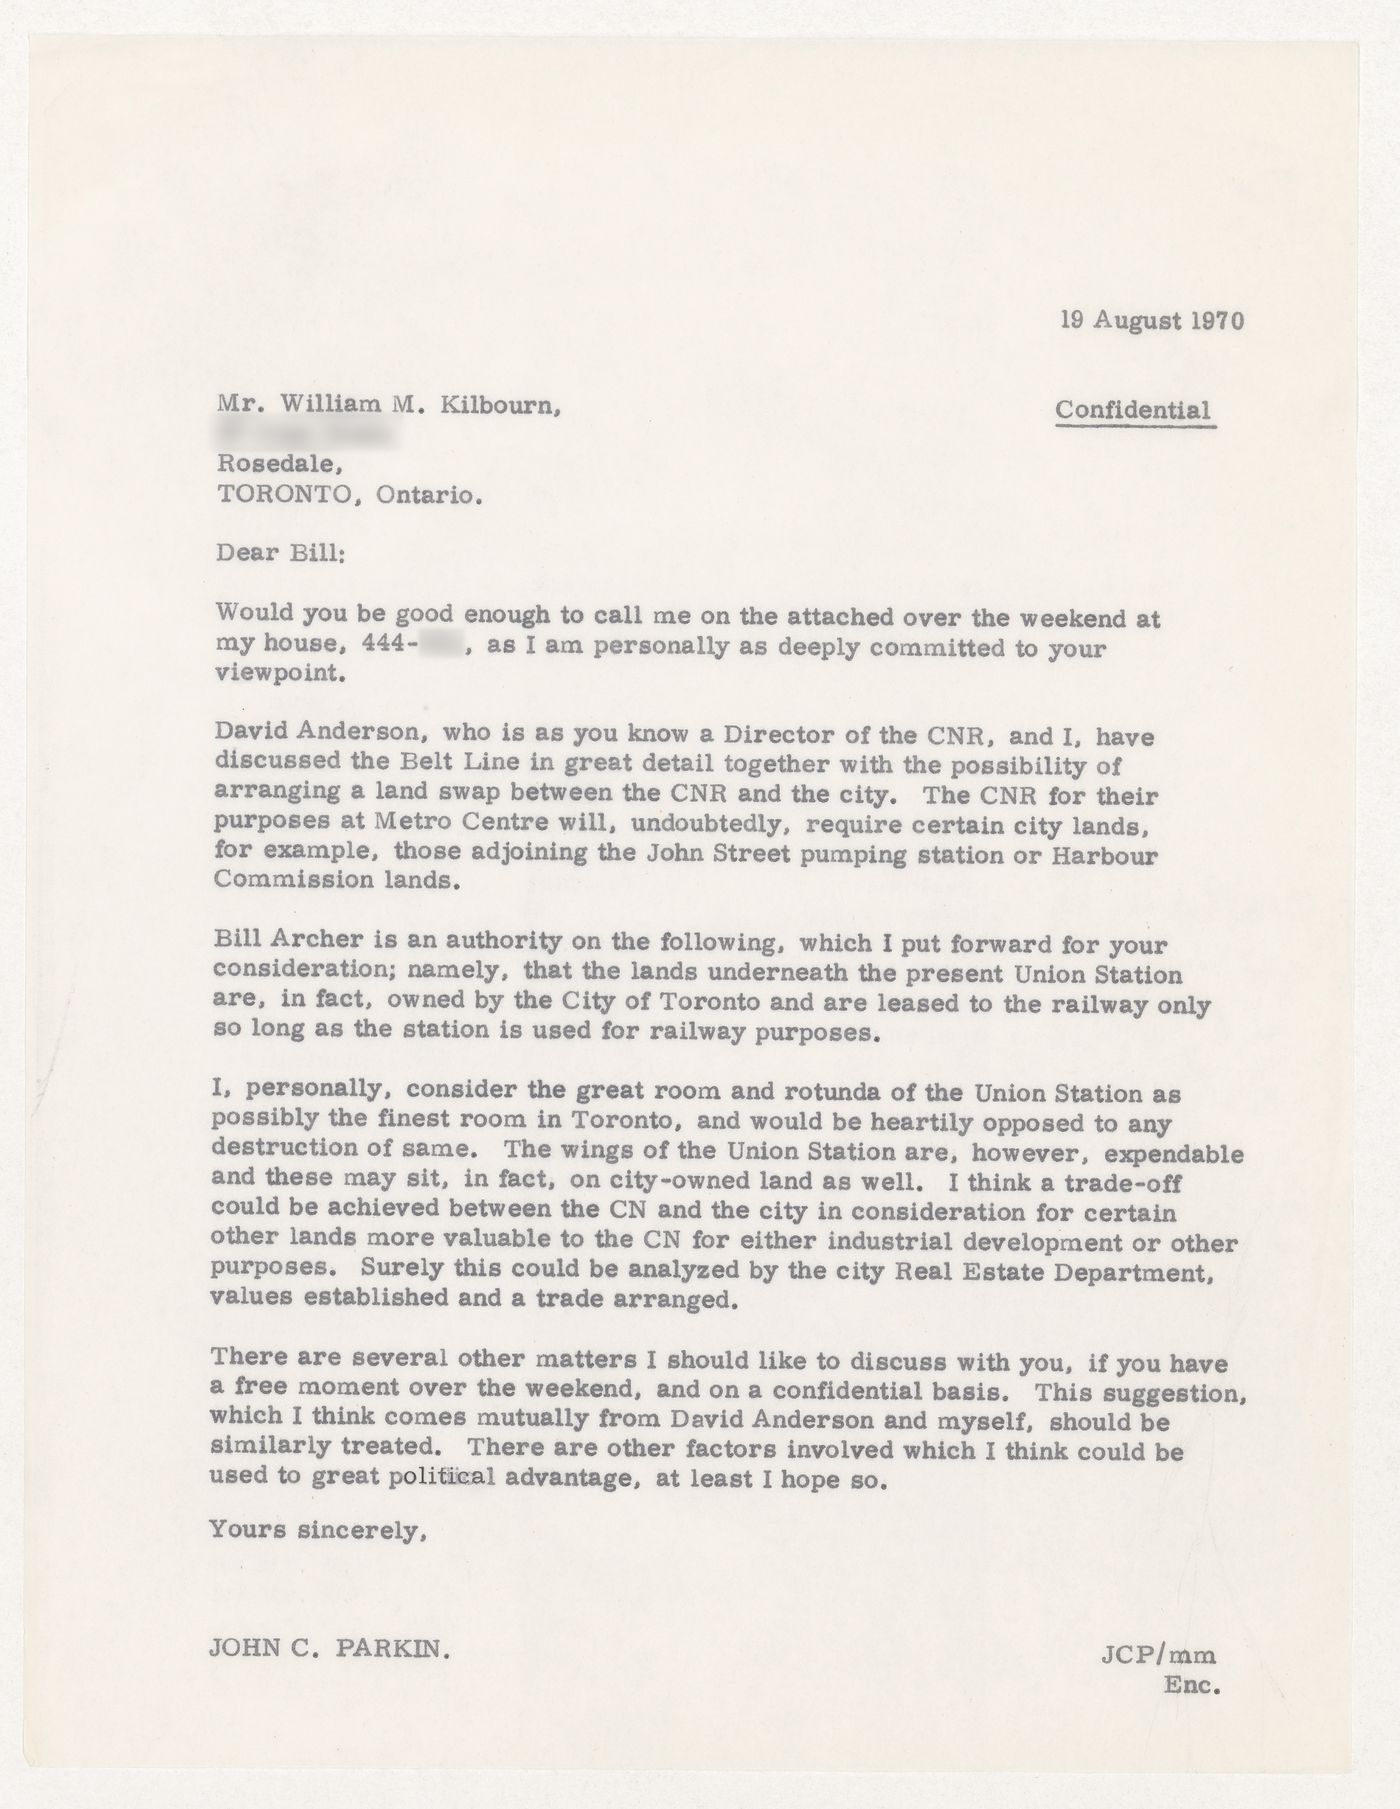 Letter from Parkin to William M. Kilbourn on Toronto Union Station development